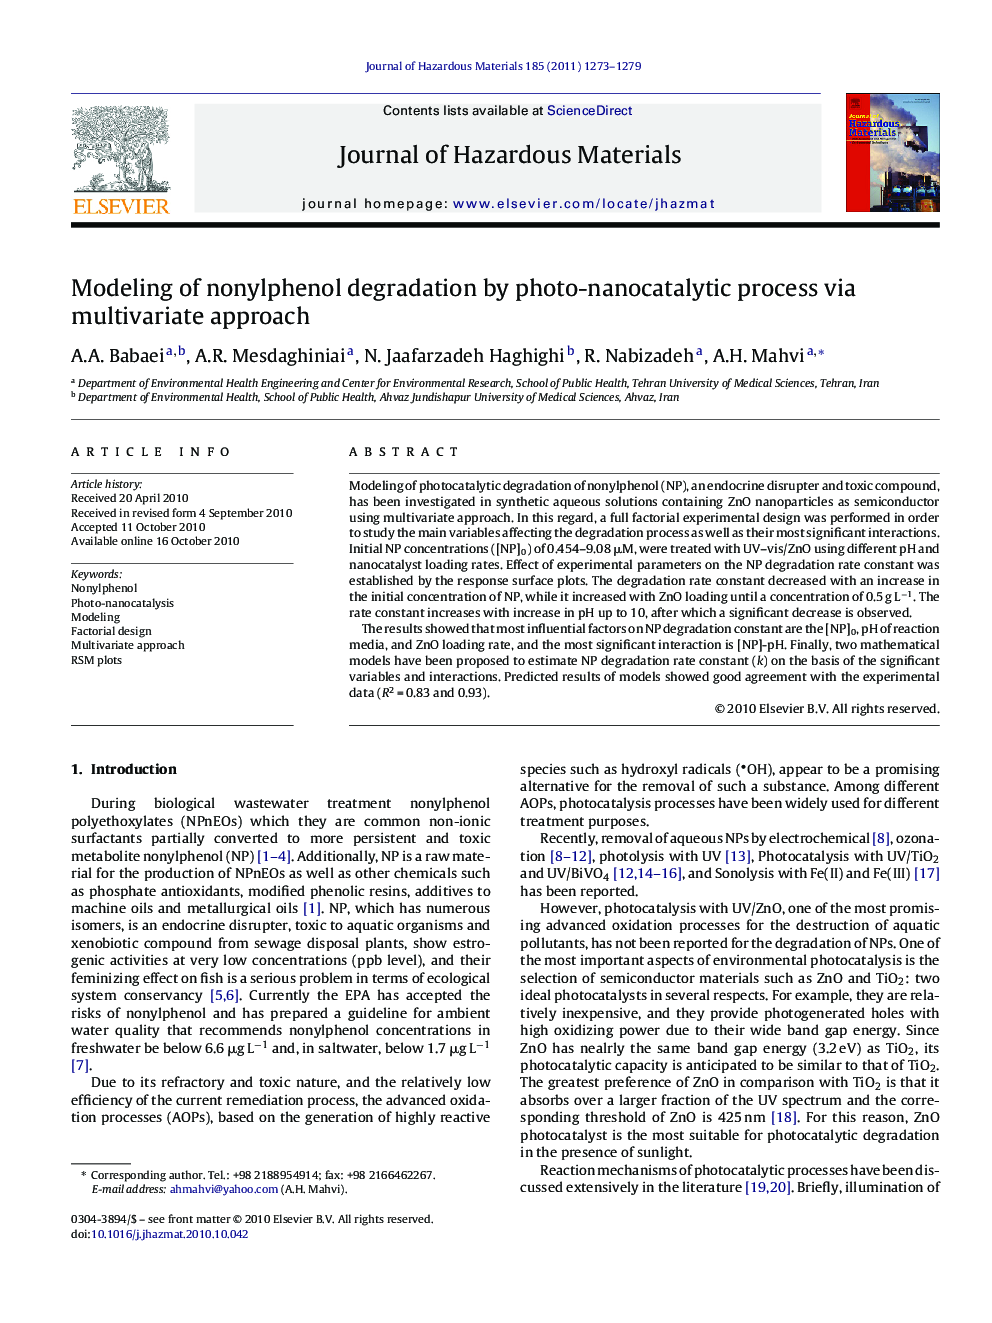 Modeling of nonylphenol degradation by photo-nanocatalytic process via multivariate approach